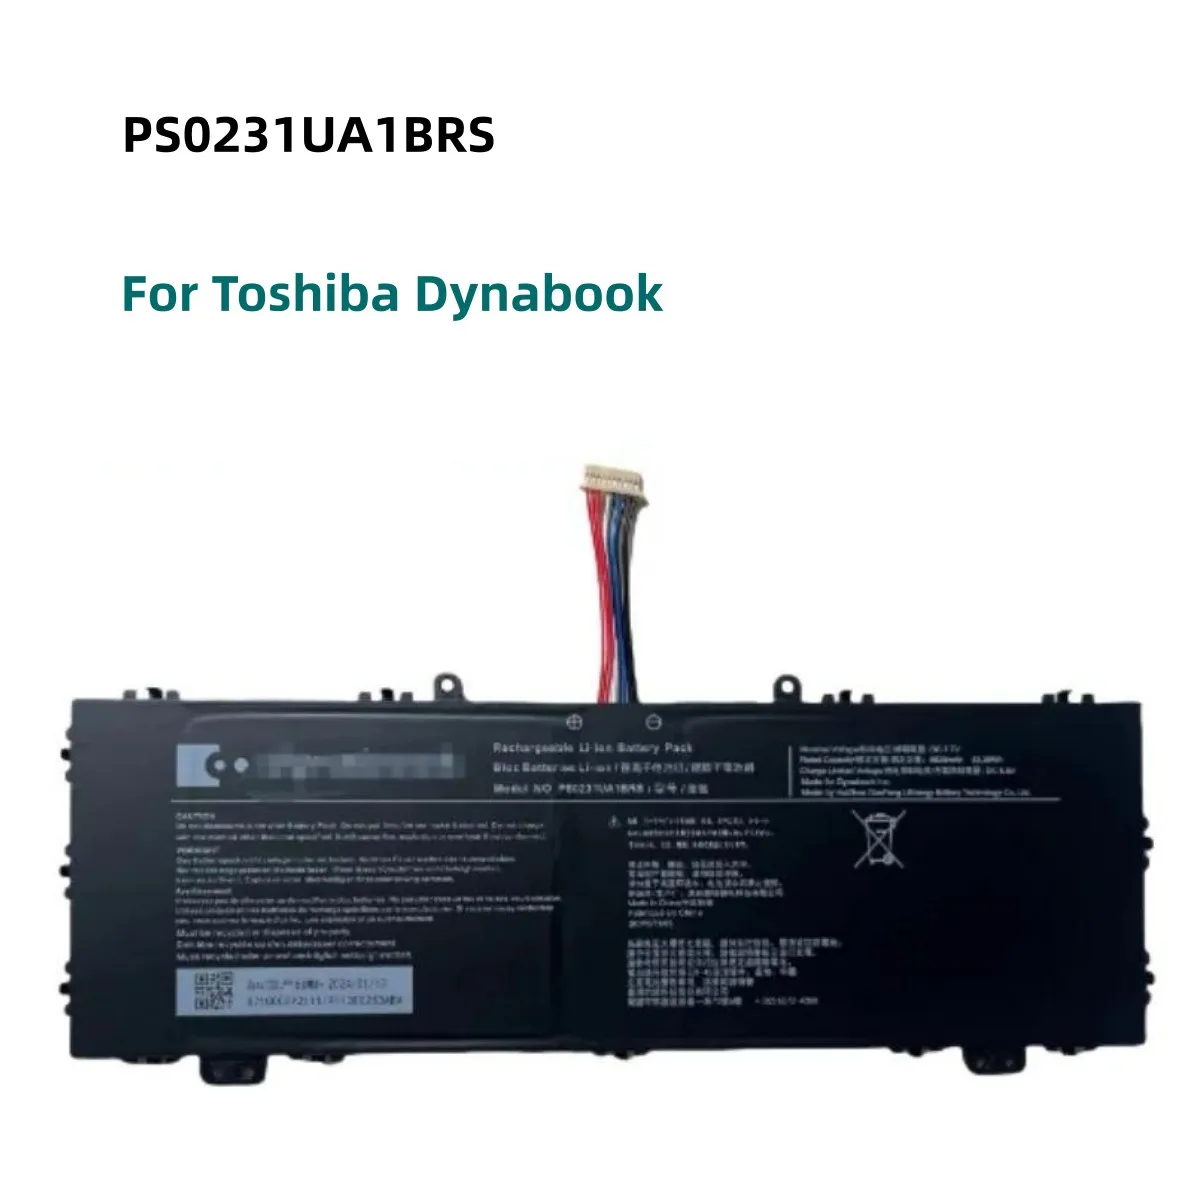 

Аккумулятор 7,7 В 5830 мАч PS0231UA1BRS для Toshiba Dynabook, Аккумуляторы для ноутбуков